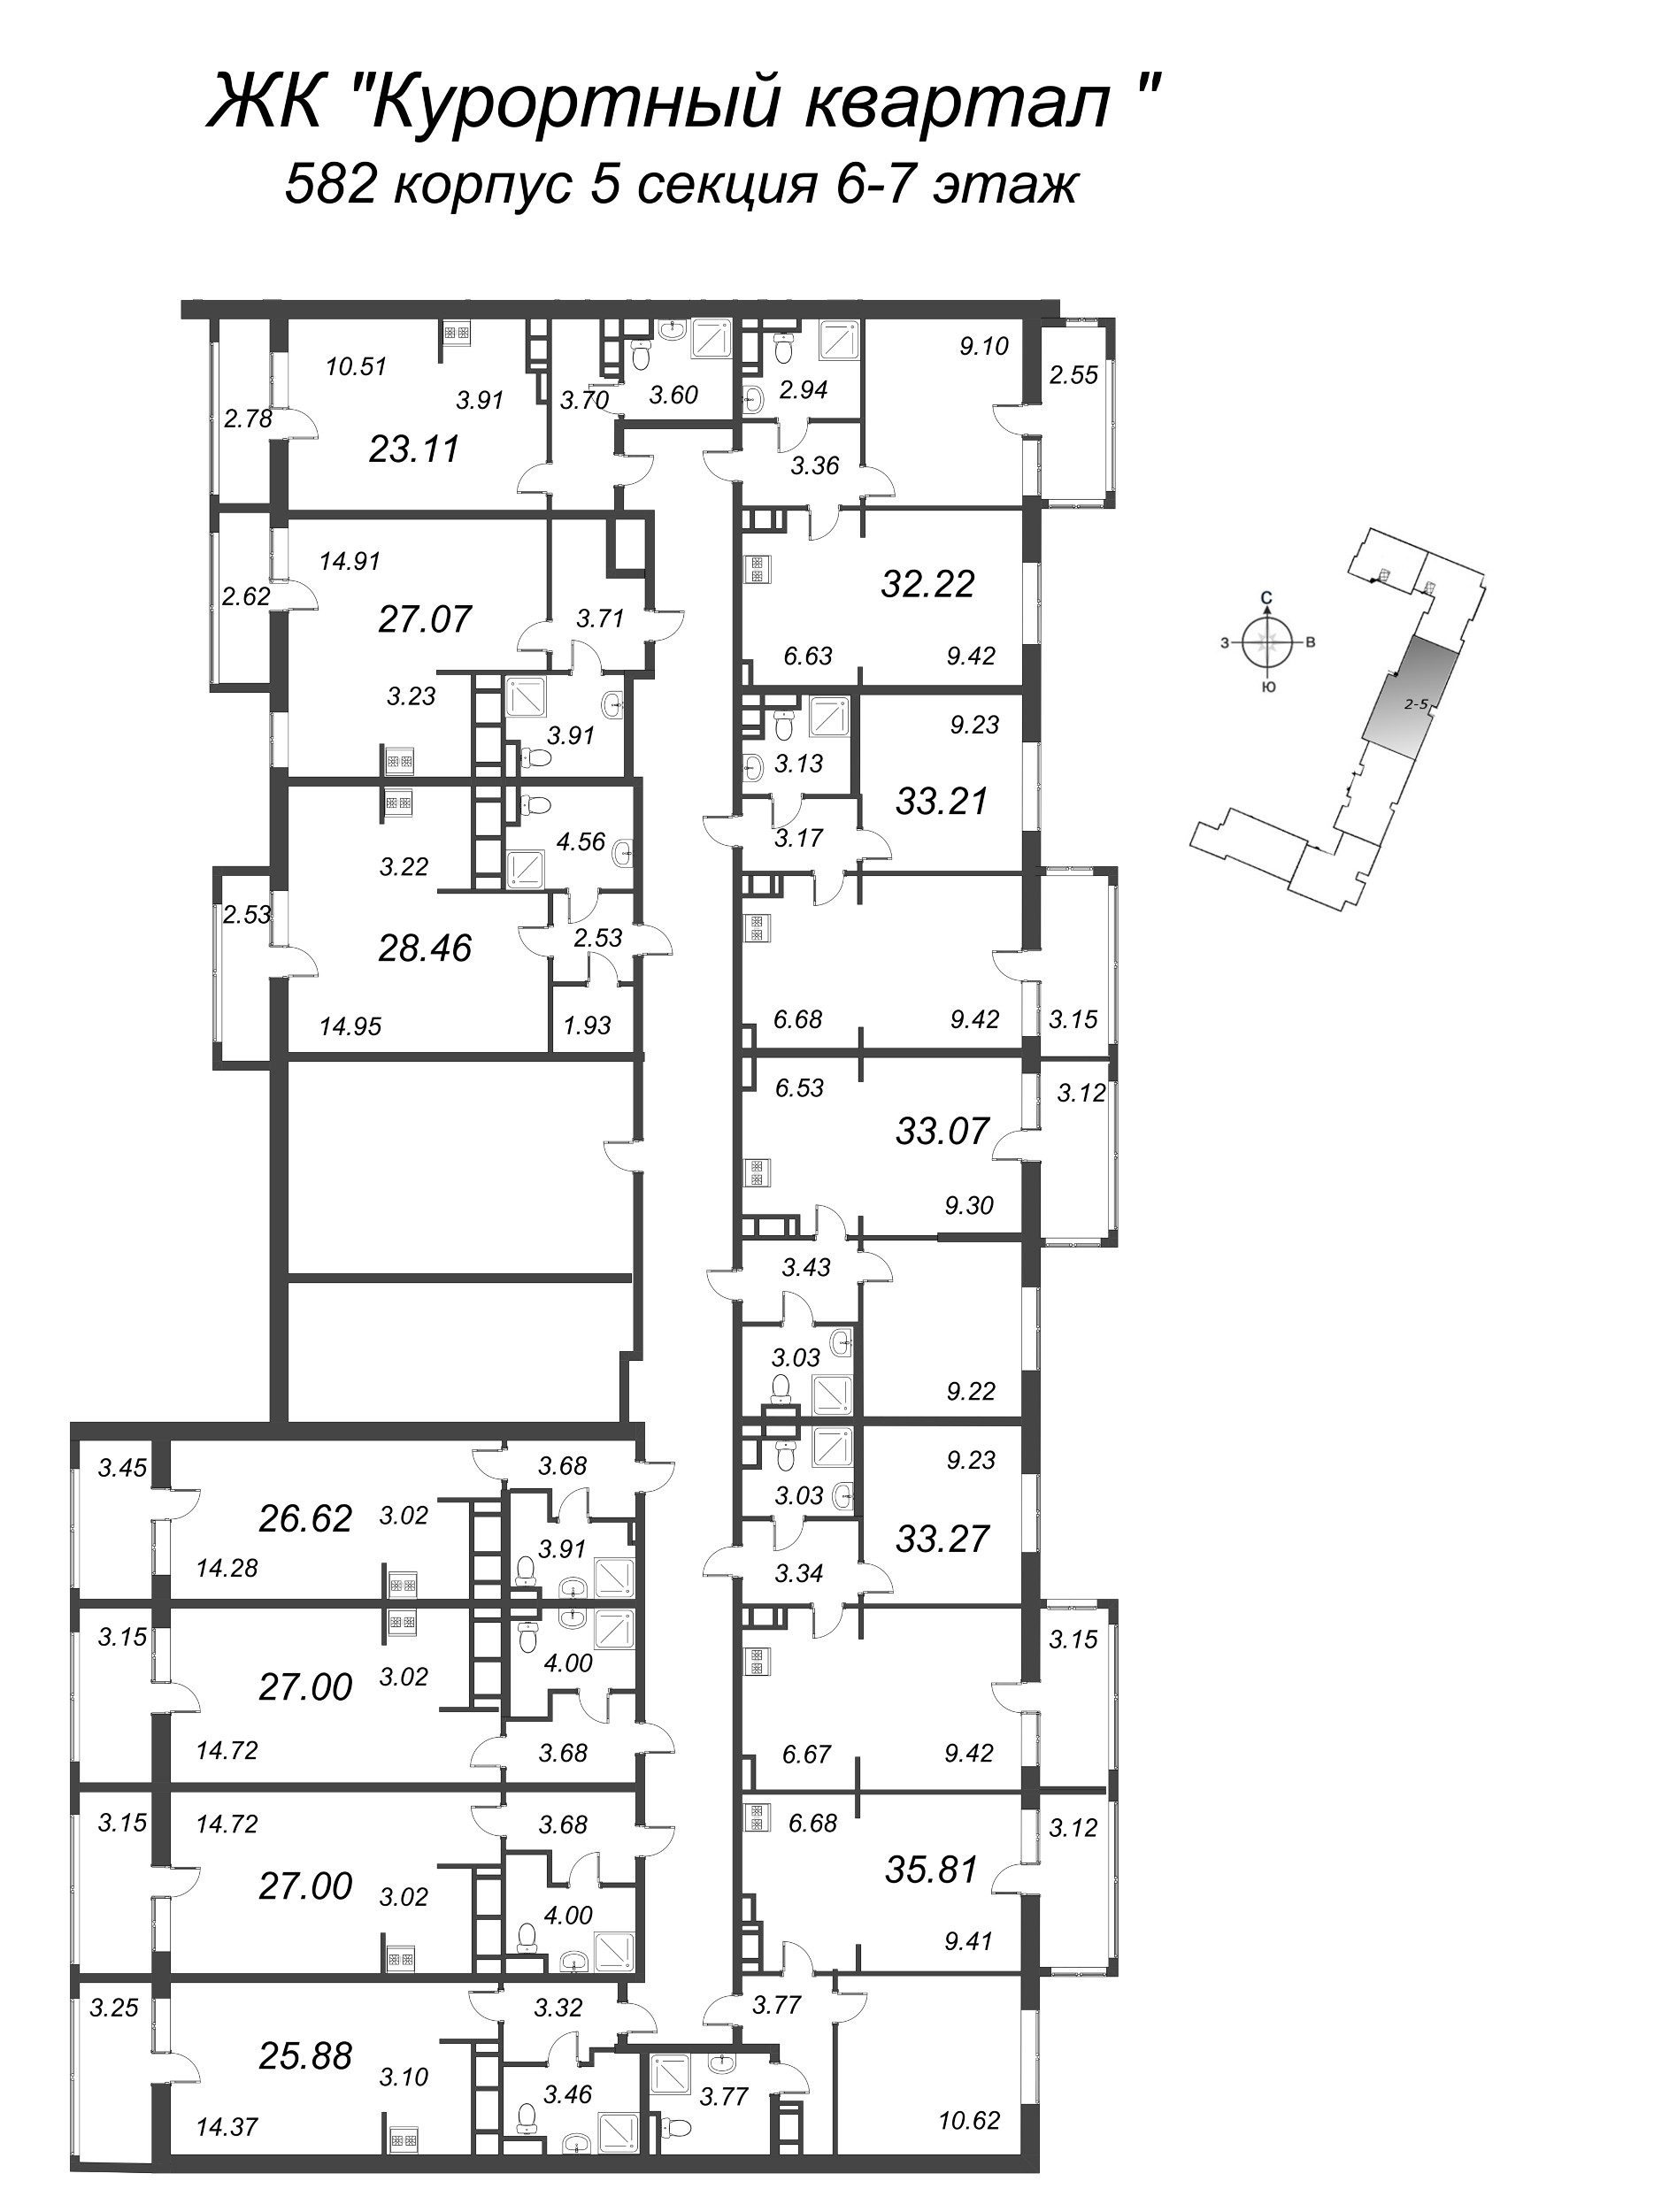 2-комнатная (Евро) квартира, 33.21 м² - планировка этажа